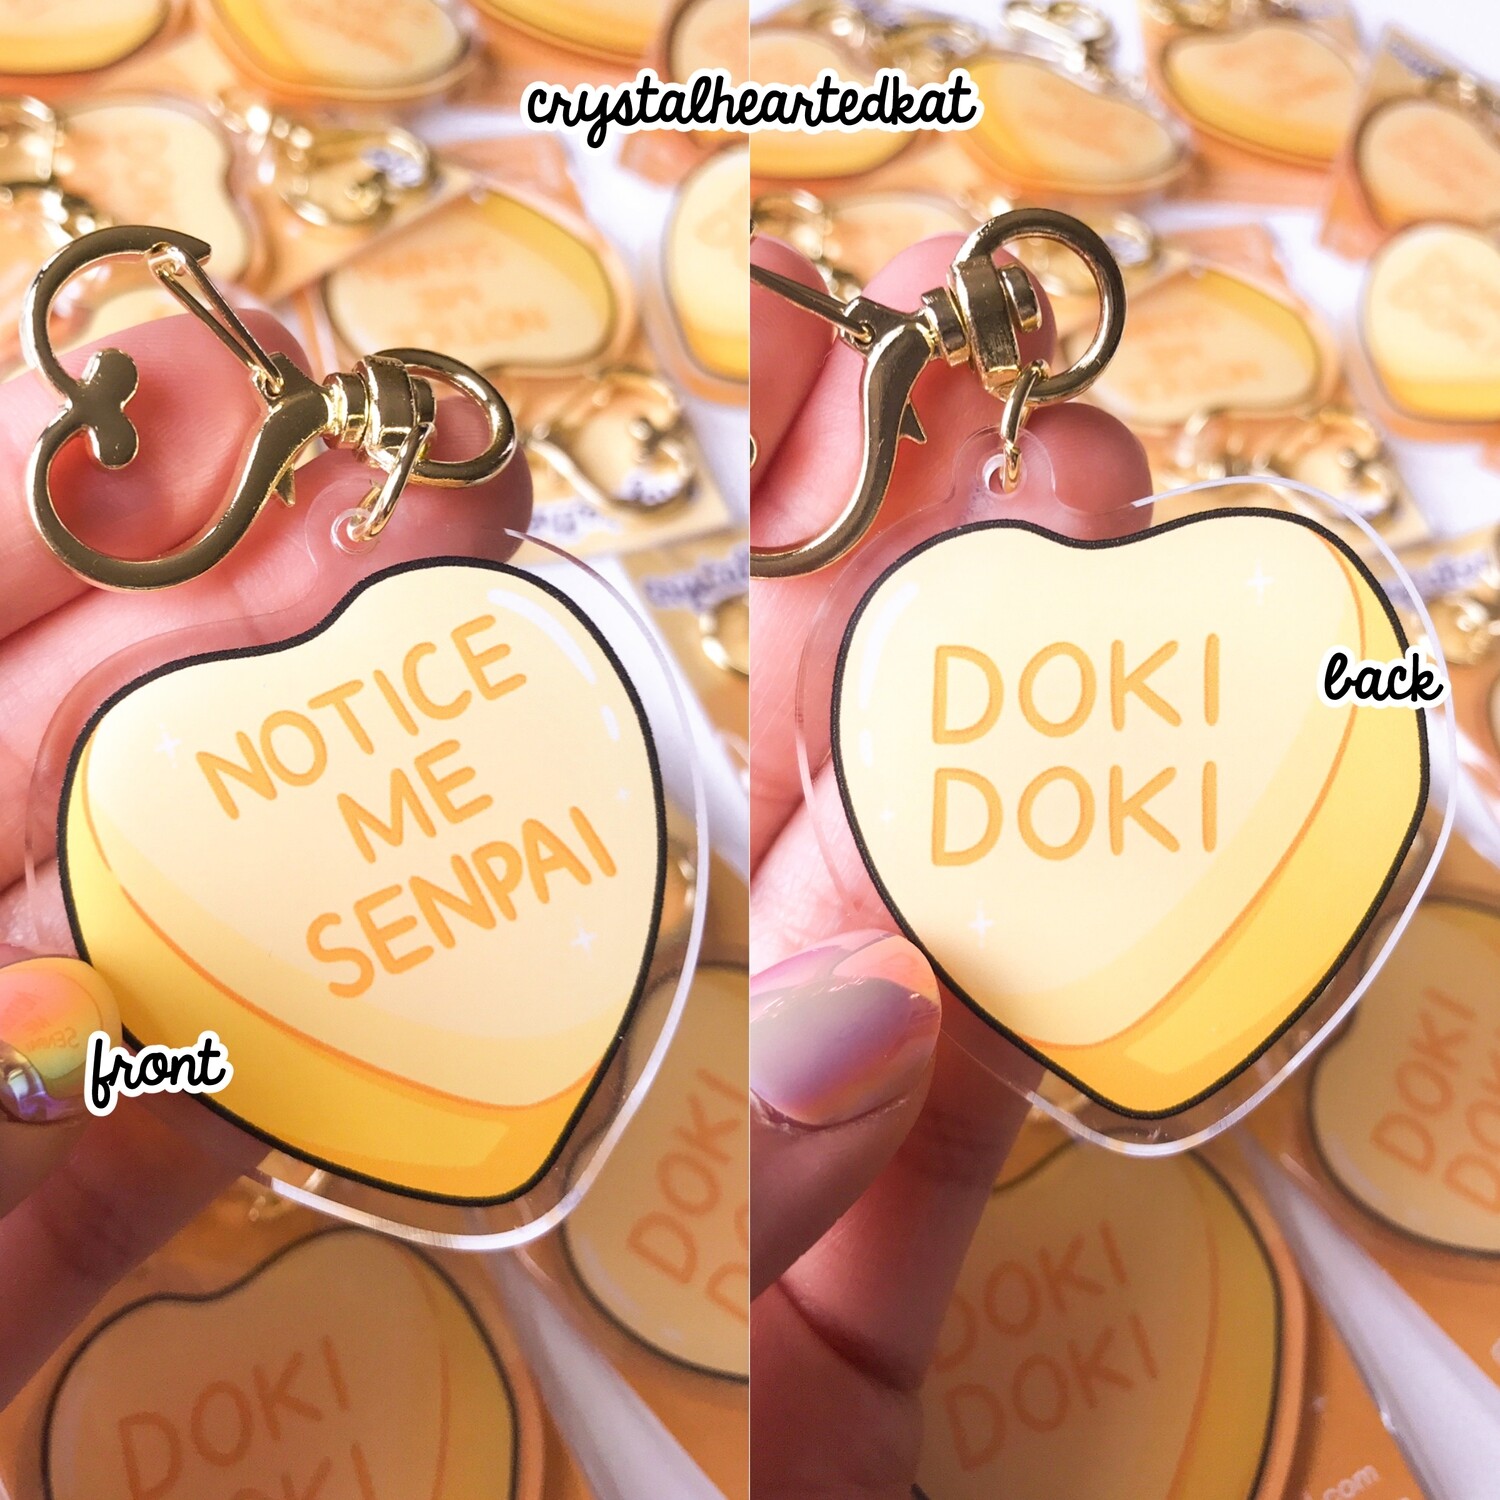 Candy Heart Keychain Charm - Notice Me Senpai / Doki Doki